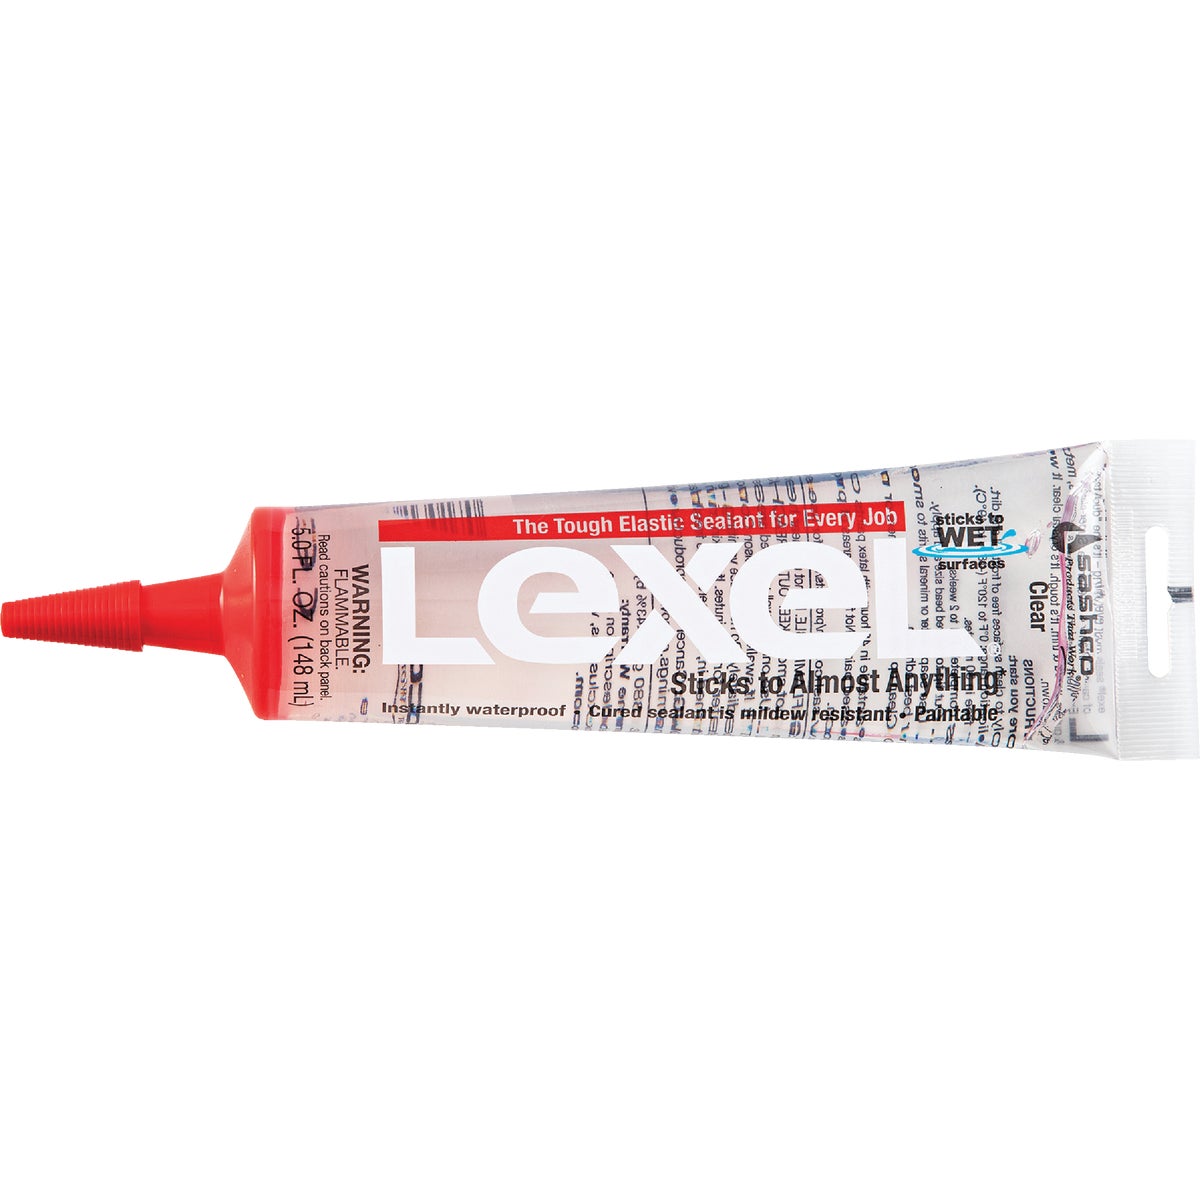 Item 780464, Lexel is the Tough Elastic Sealant for Every Job. Super-elastic.